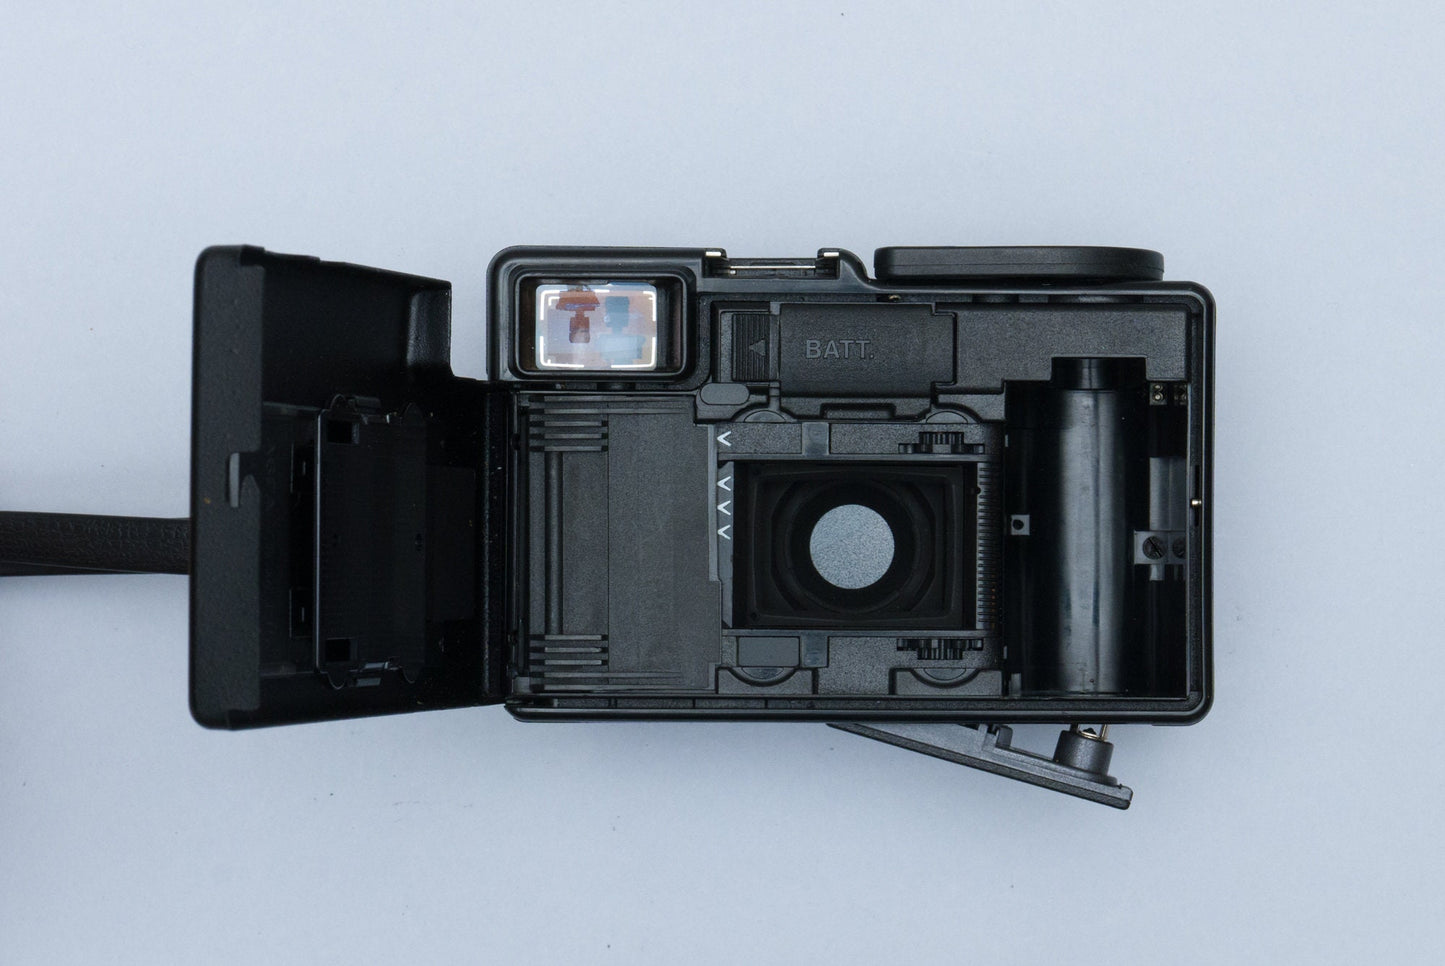 Agfa Optima 1535 Sensor RANGEFINDER f2.8 Solitar Compact 35mm Film Camera